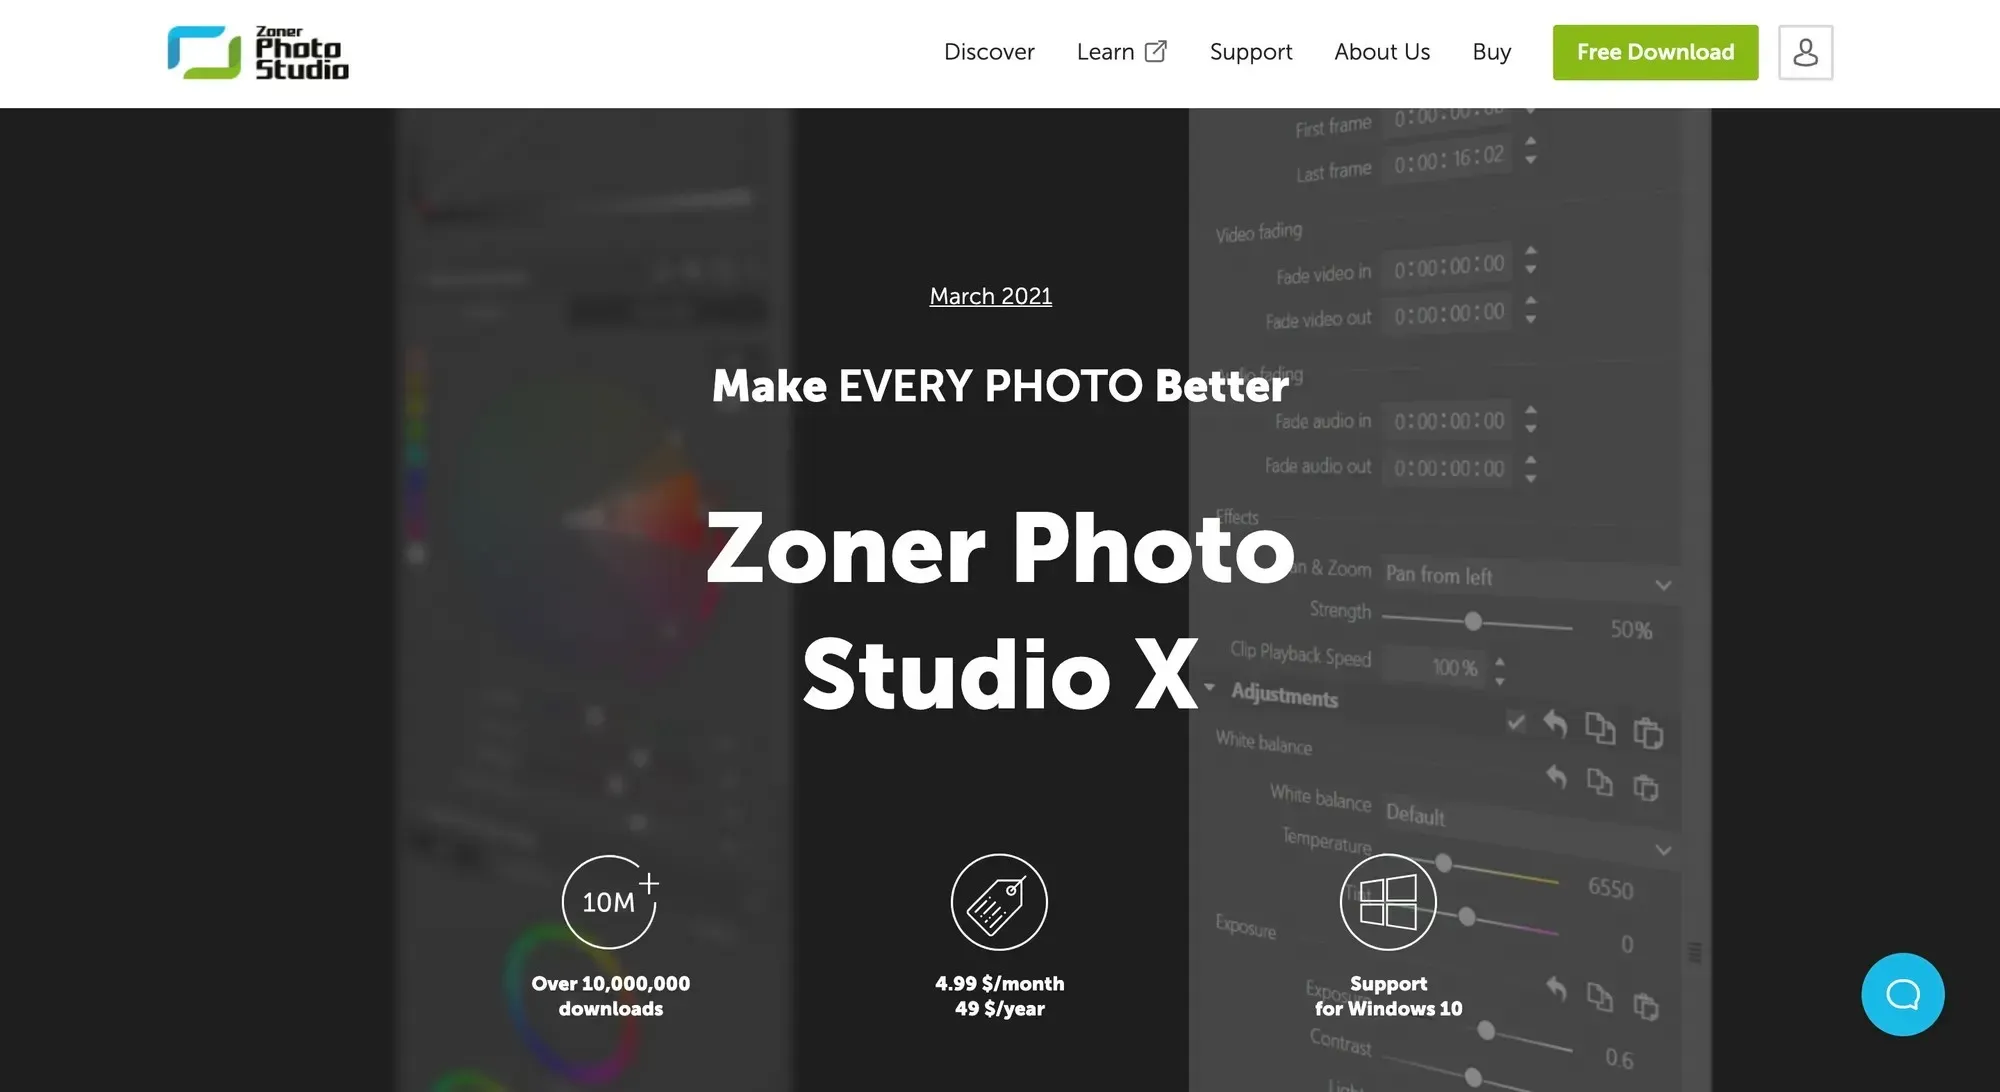 Zoner Photo Studio interface